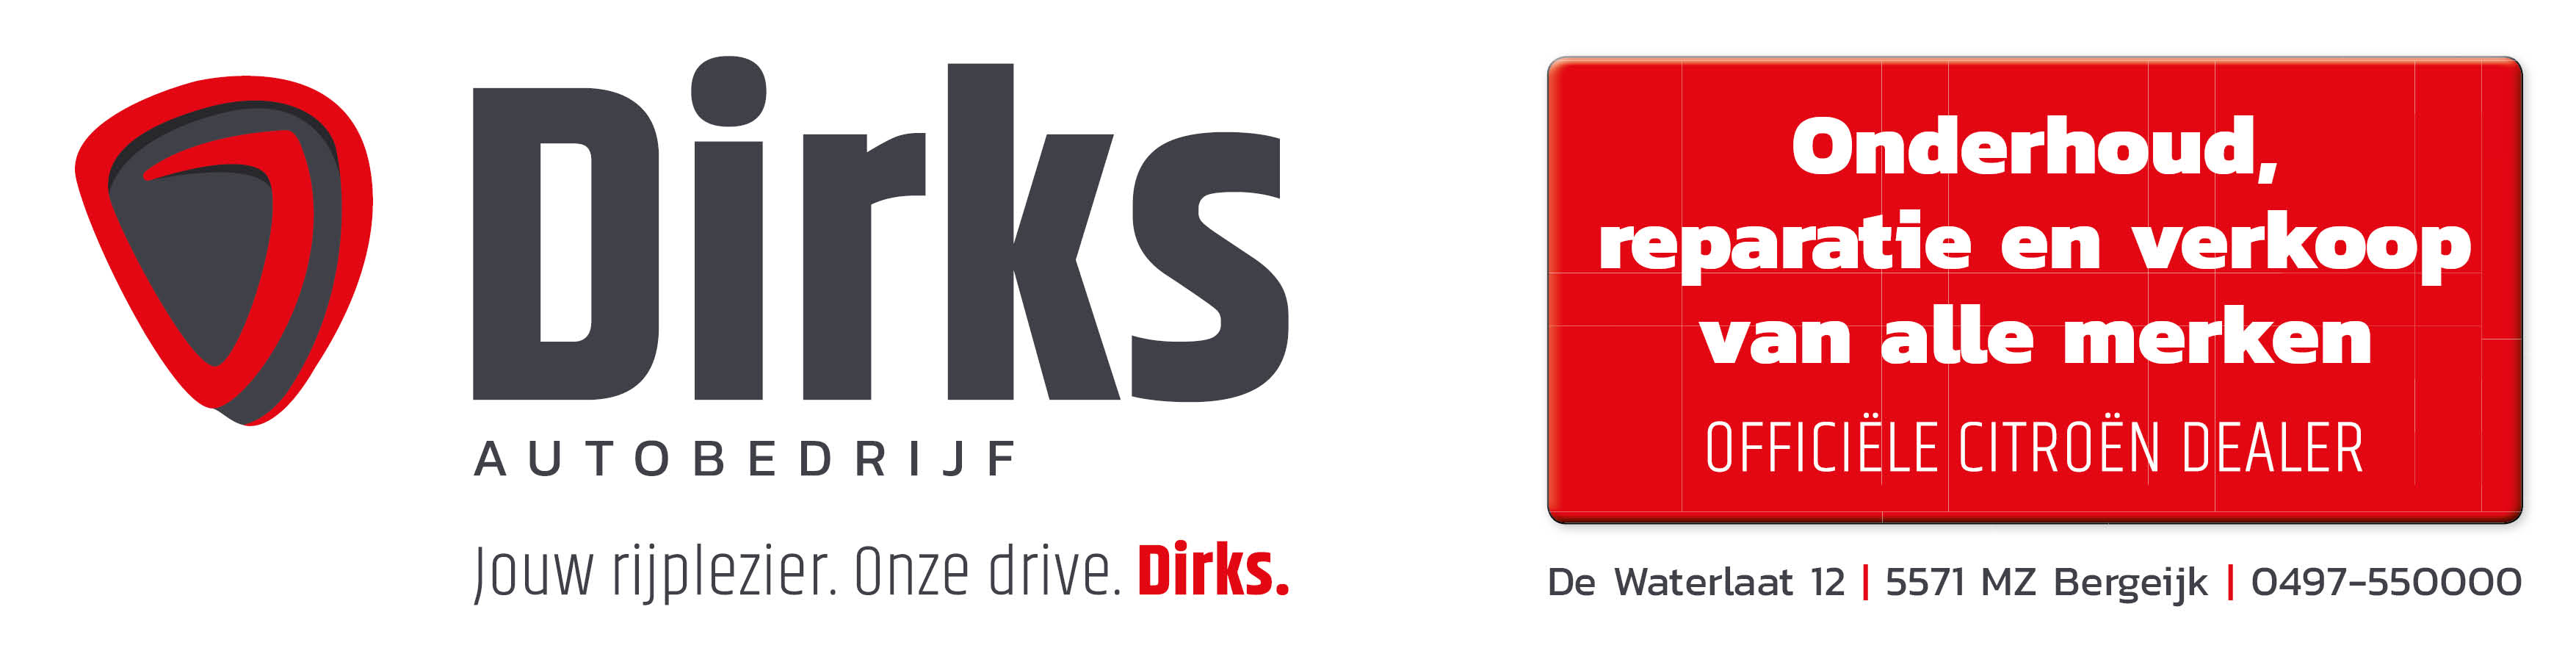 Dirks Autobedrijf